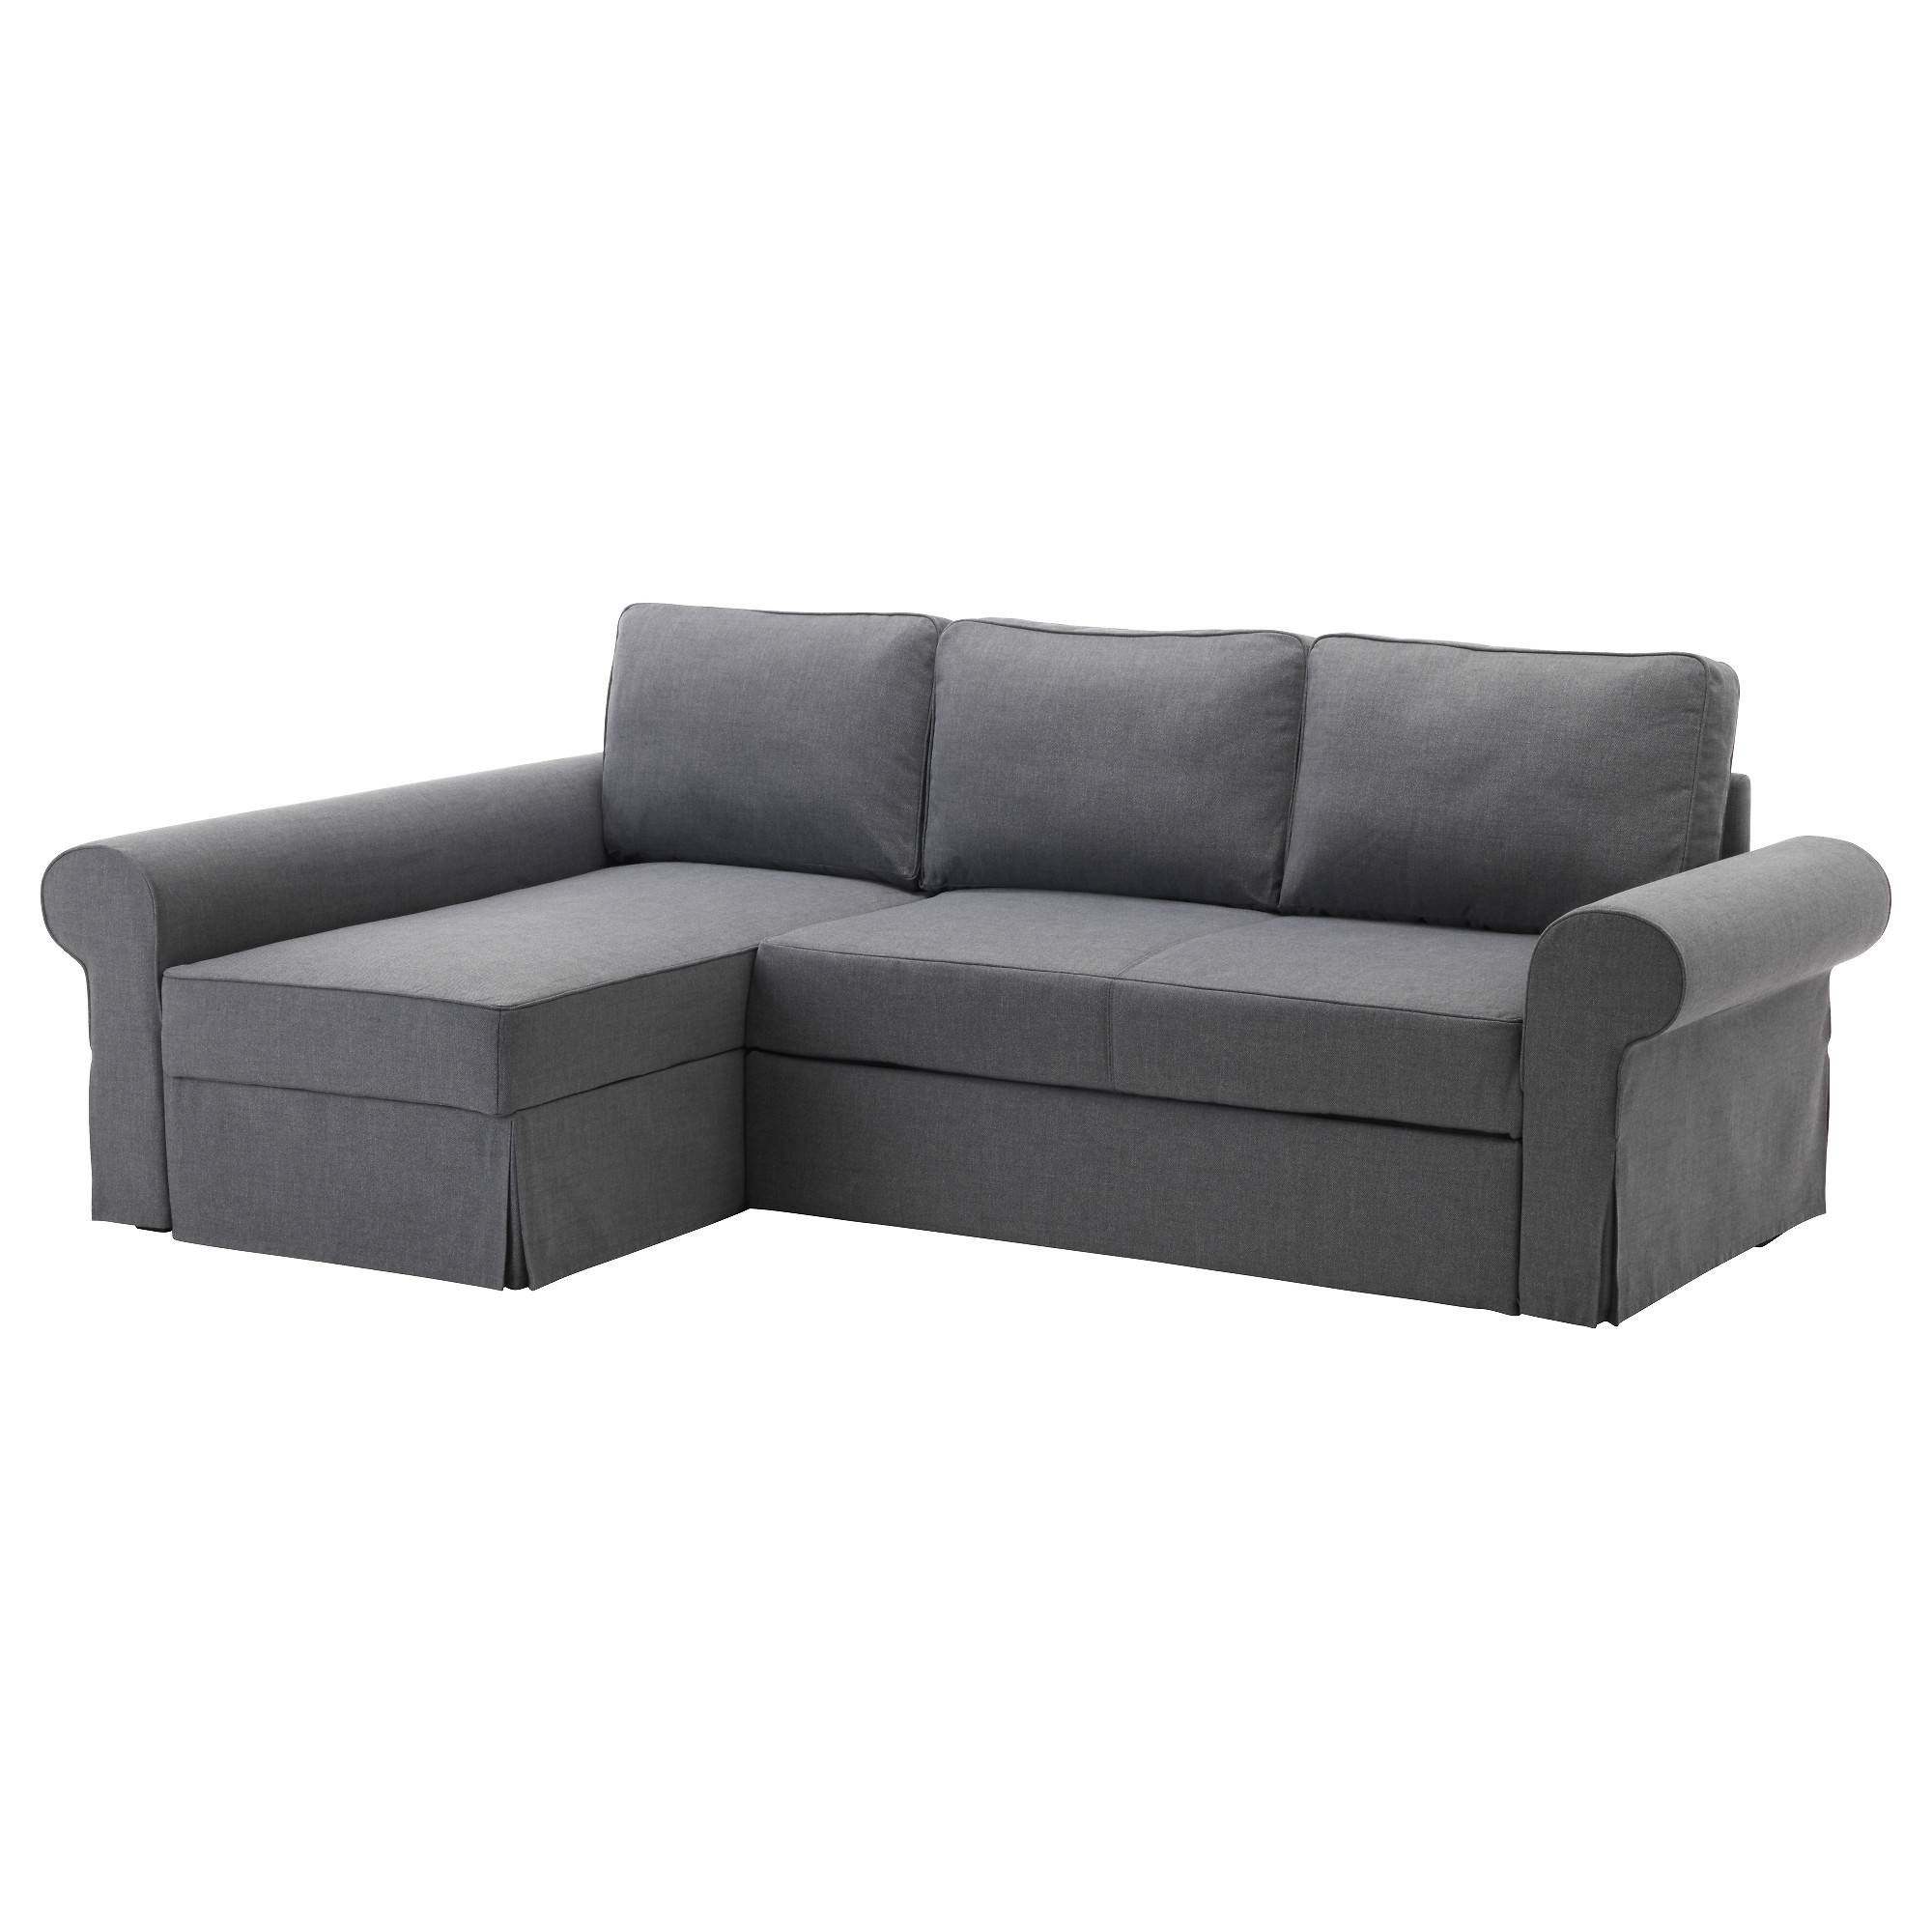 Backabro Sofa Bed With Chaise Longue Nordvalla Dark Grey – Ikea Inside Ikea Chaise Lounge Sofa (View 8 of 30)